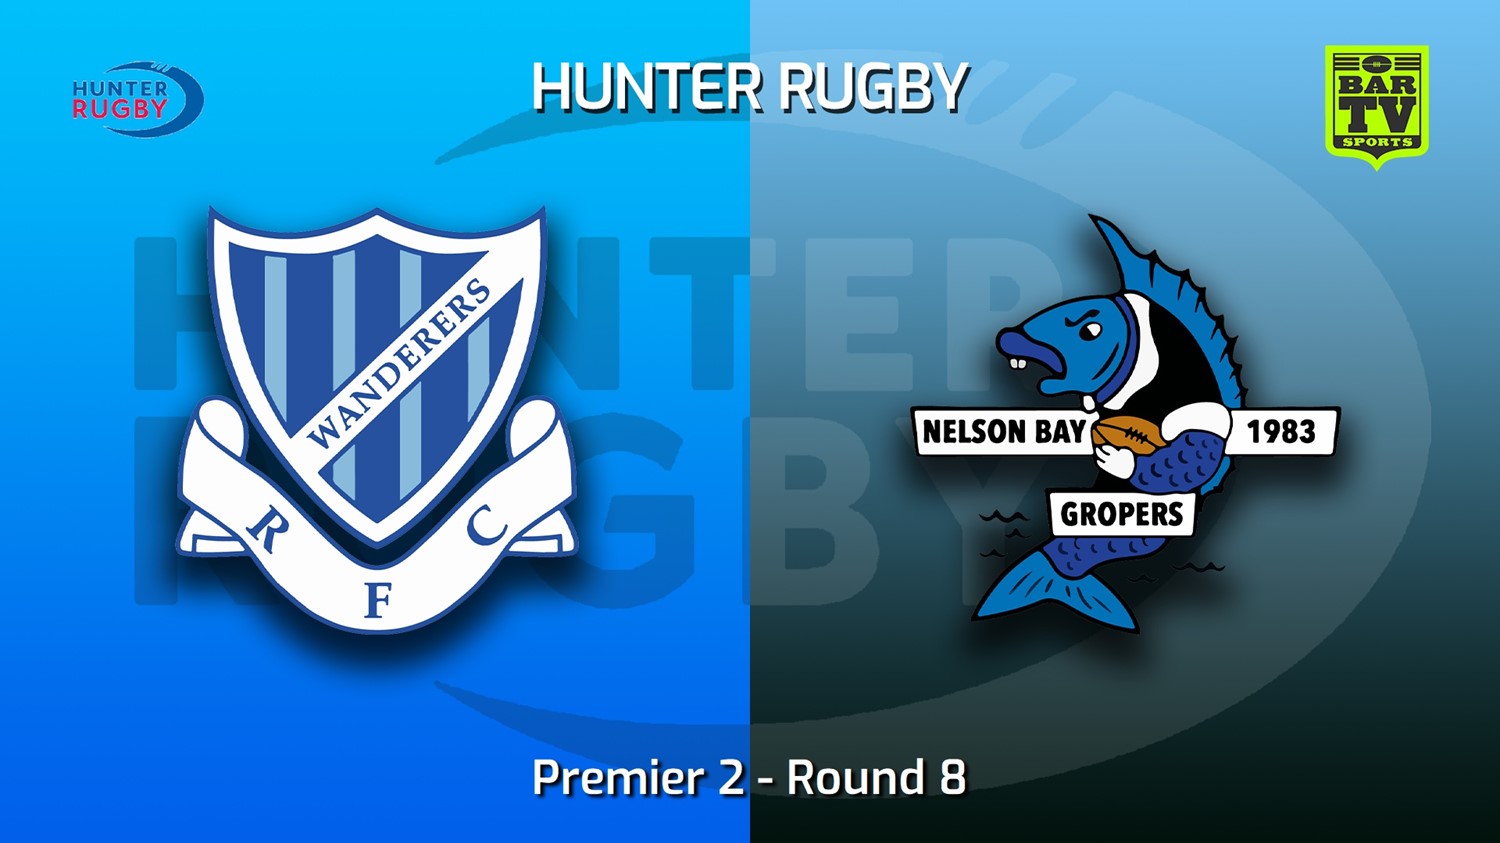 220618-Hunter Rugby Round 8 - Premier 2 - Wanderers v Nelson Bay Gropers Slate Image